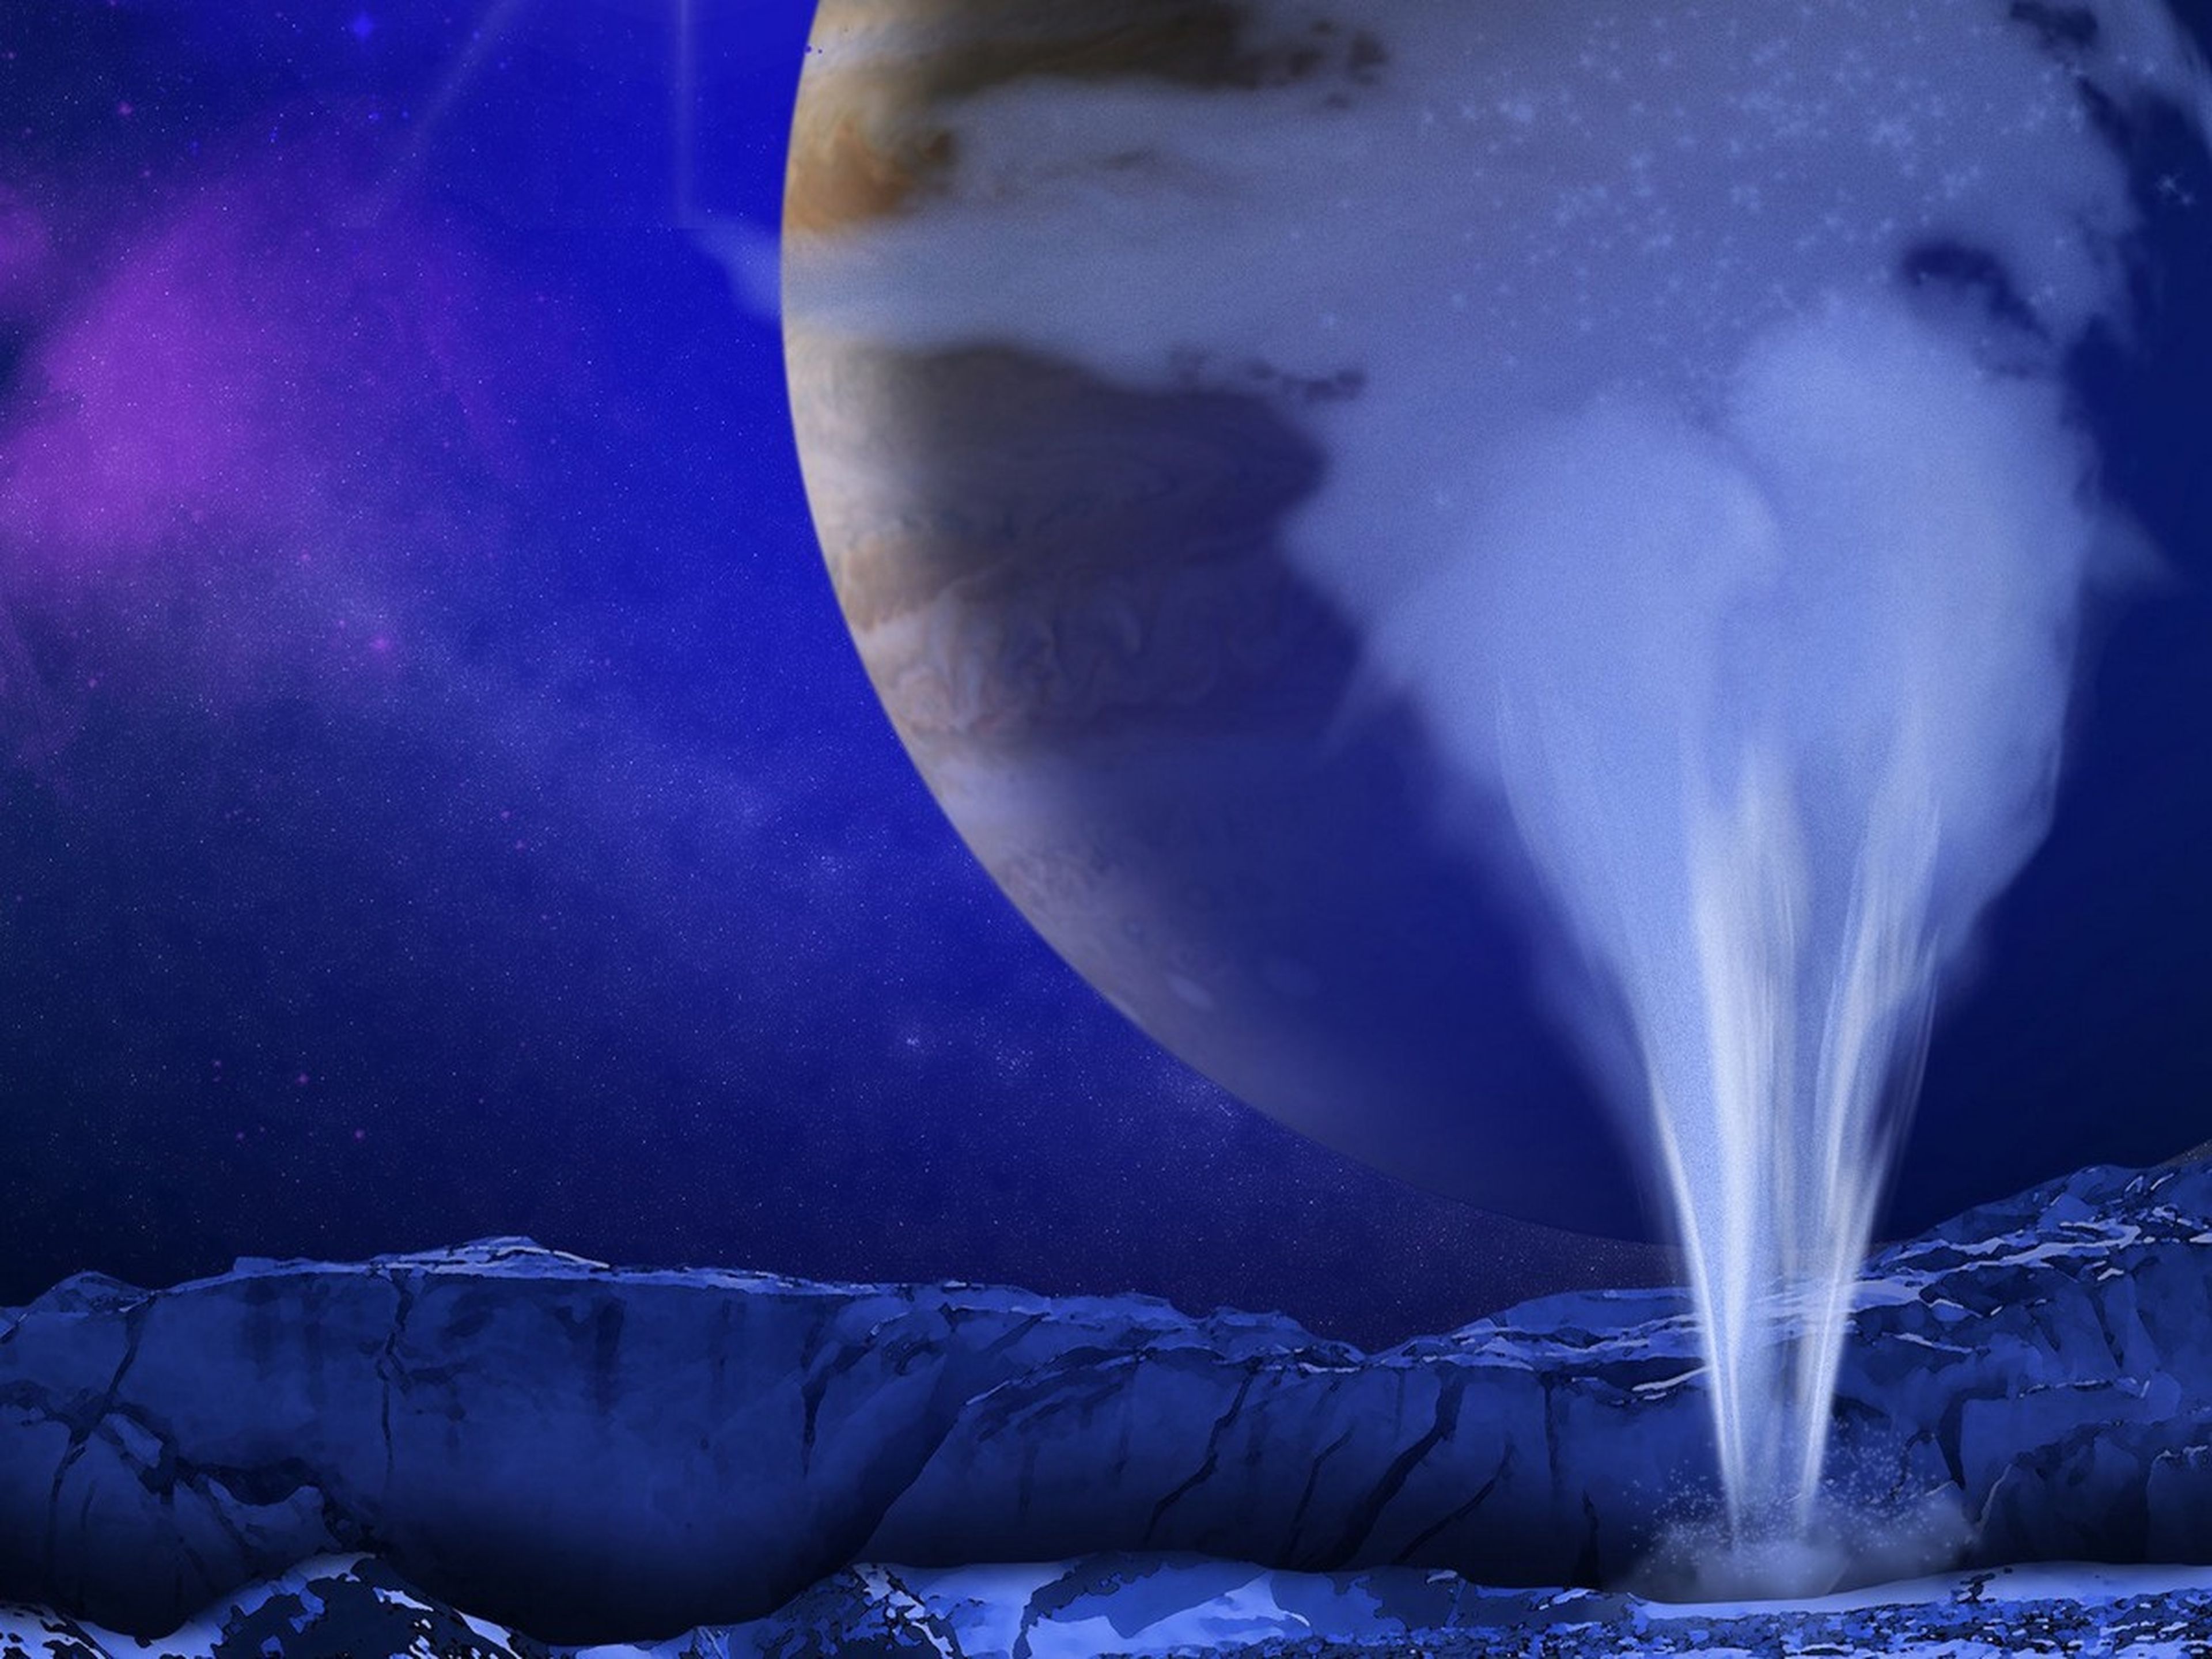 Géiseres de agua en la luna Europa